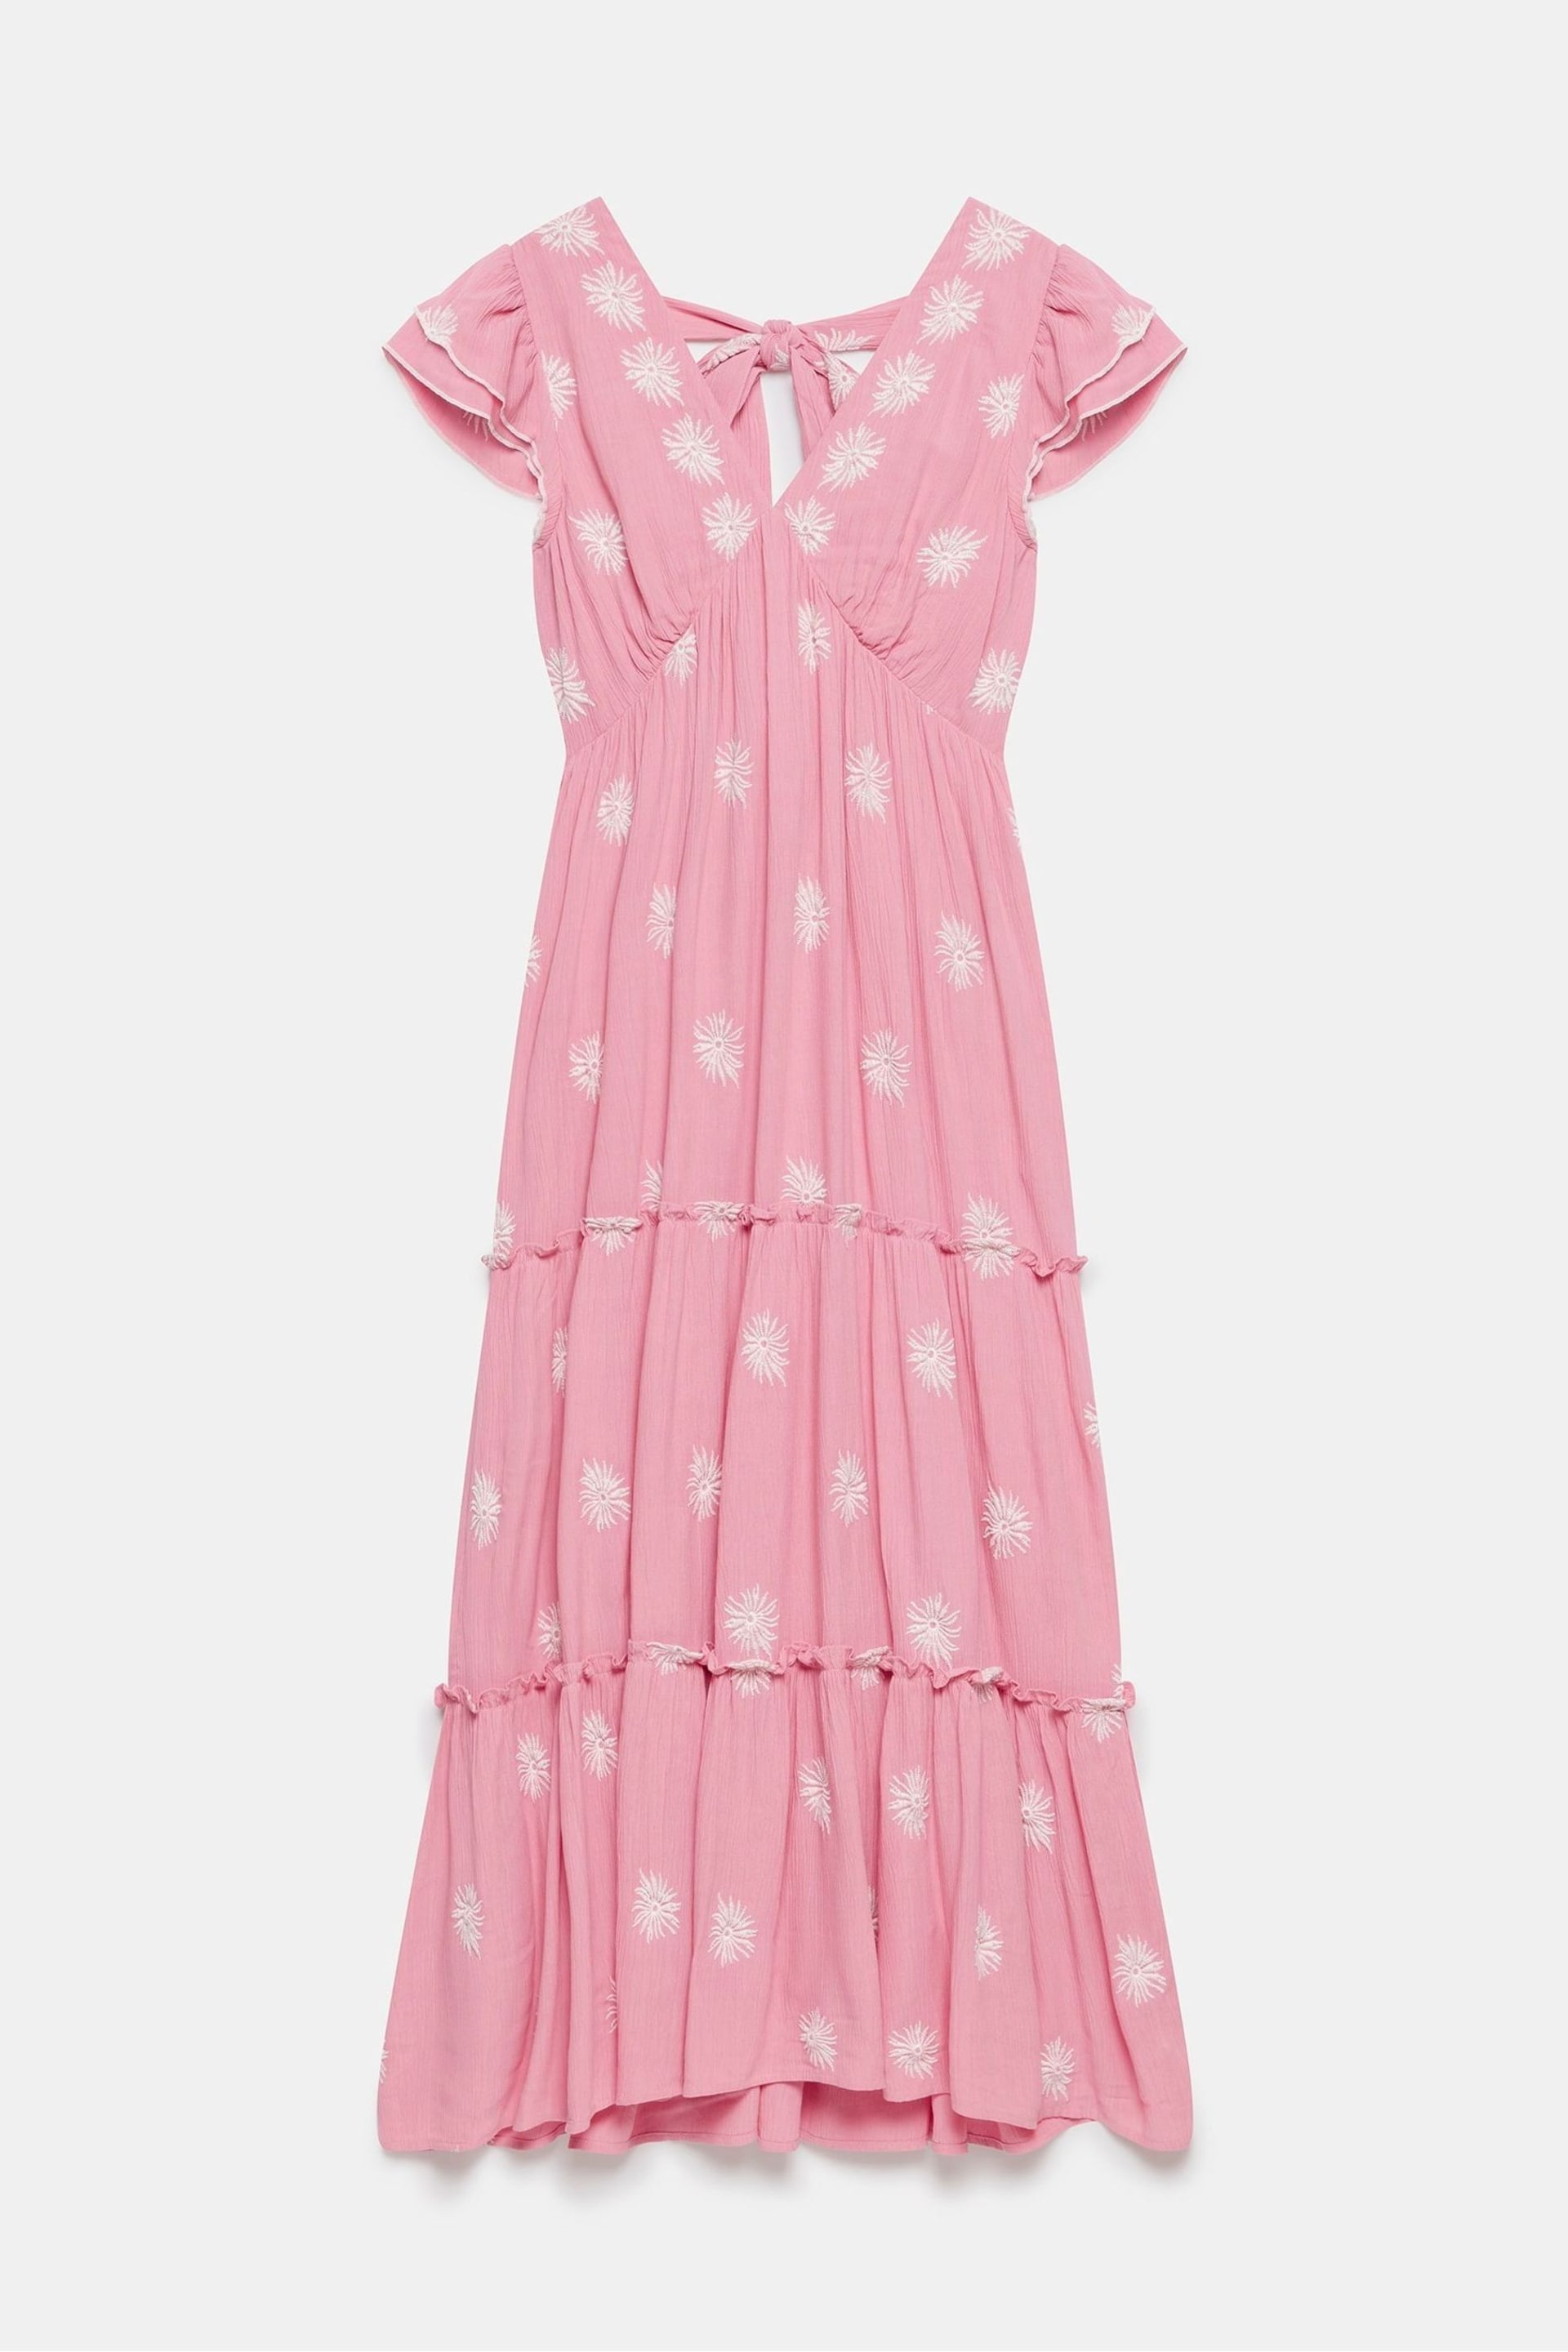 Mint Velvet Pink Floral Embroidered Maxi Dress - Image 3 of 4